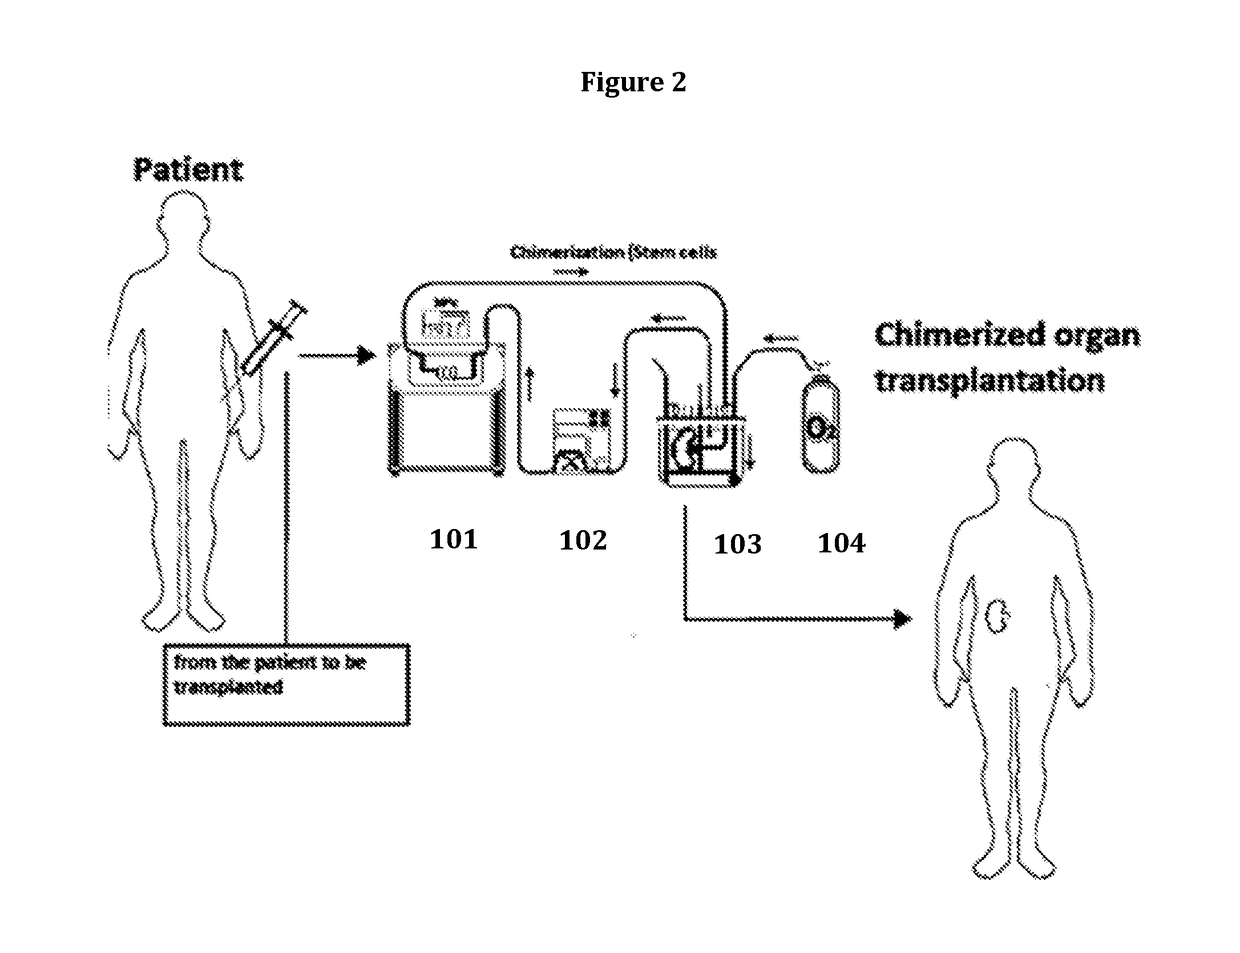 Method for organ chimerization through cellular treatment